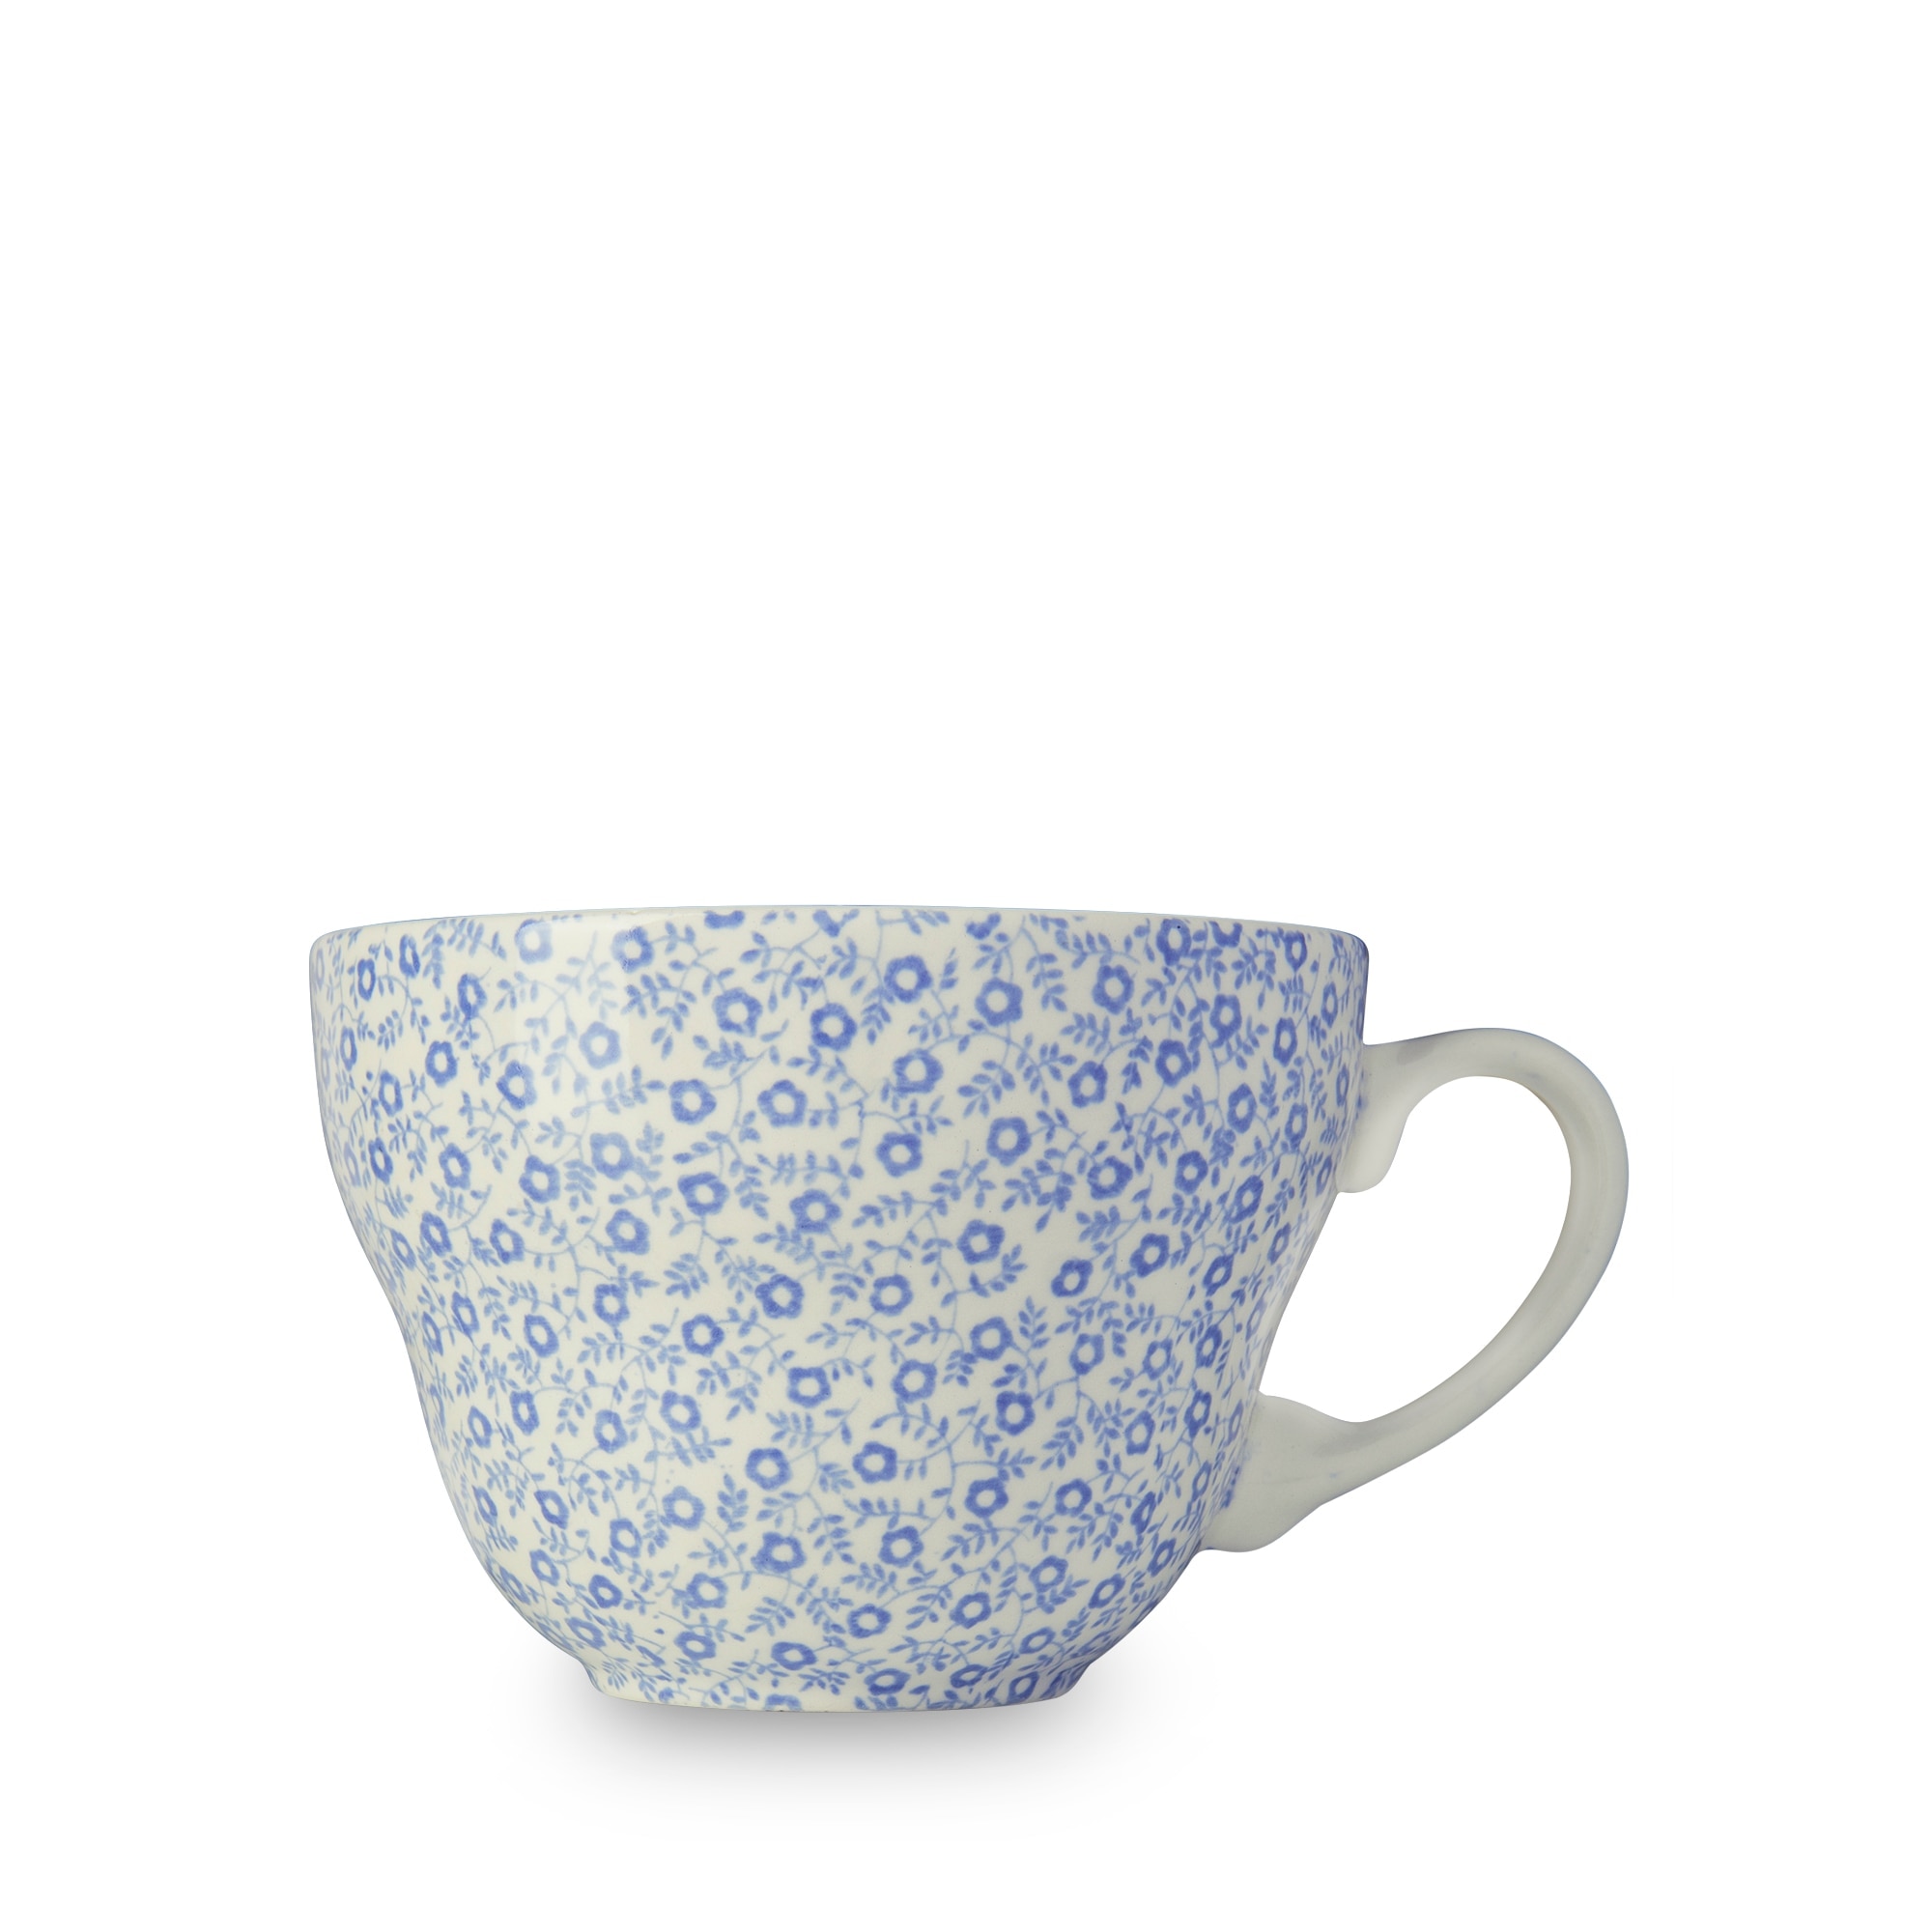 Details about   Burleigh teapot Dark Blue Felicity small 3-4 cup 400ml 